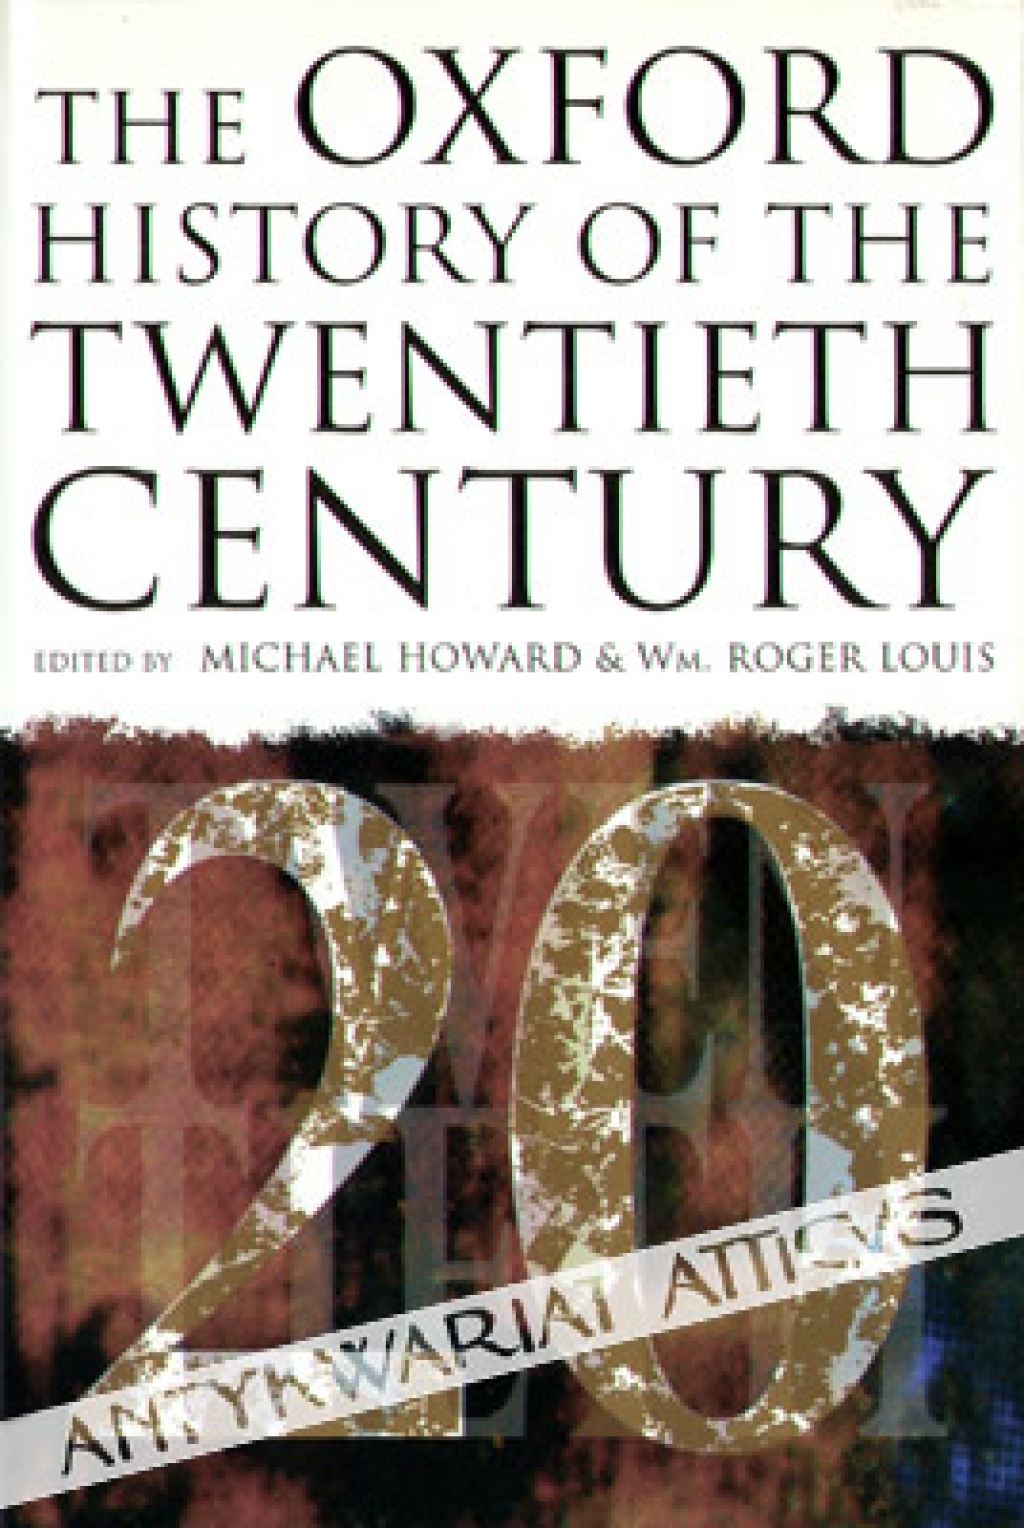 The Oxford History of the twentieth Century